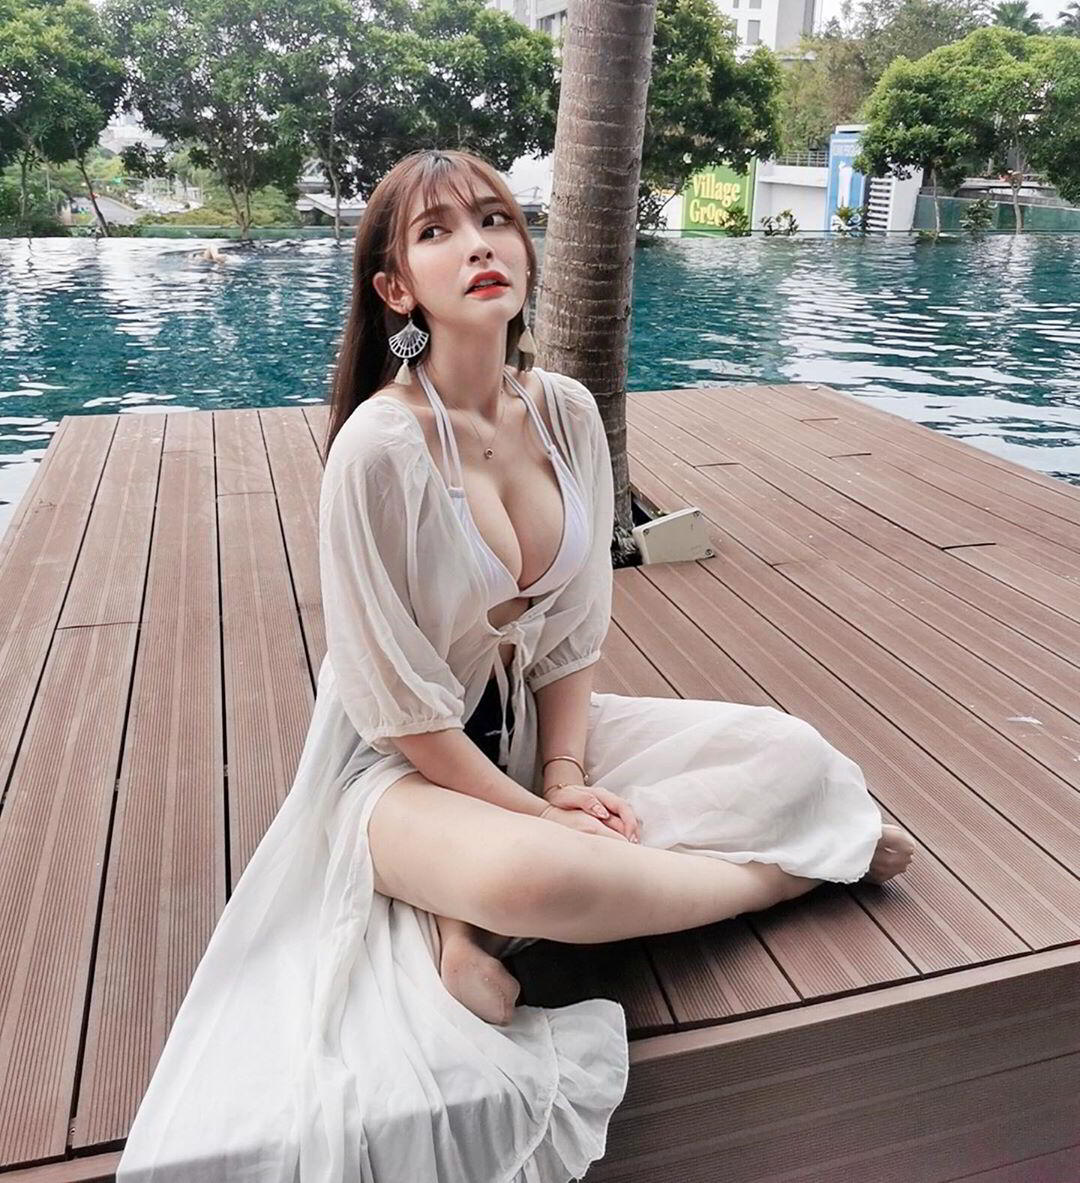 Malaysian Beauty Girl Victoria Aikyen So Hot